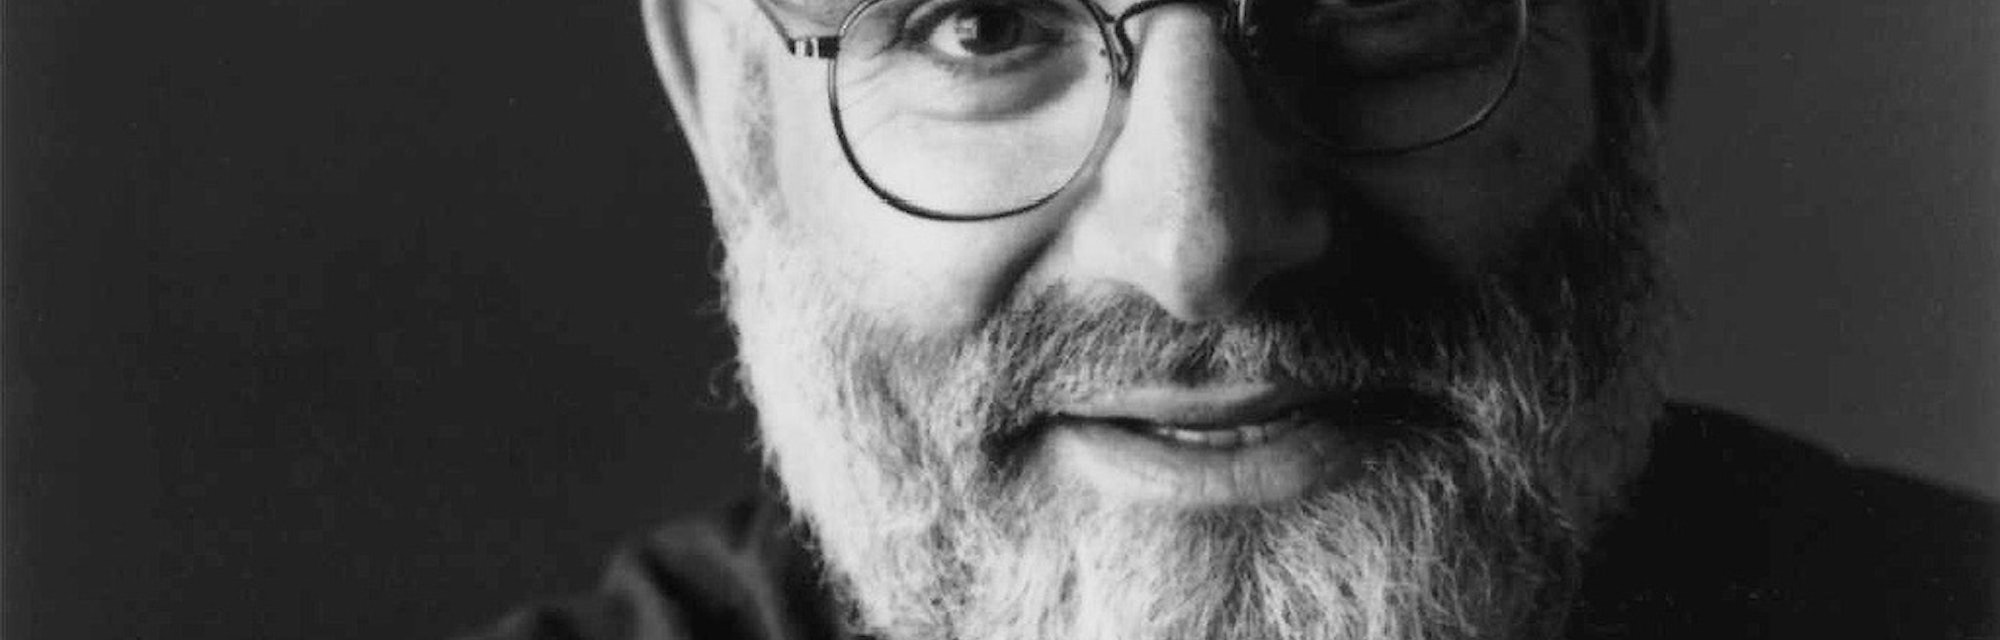 Neurologist and Writer Oliver Sacks Dies at 82